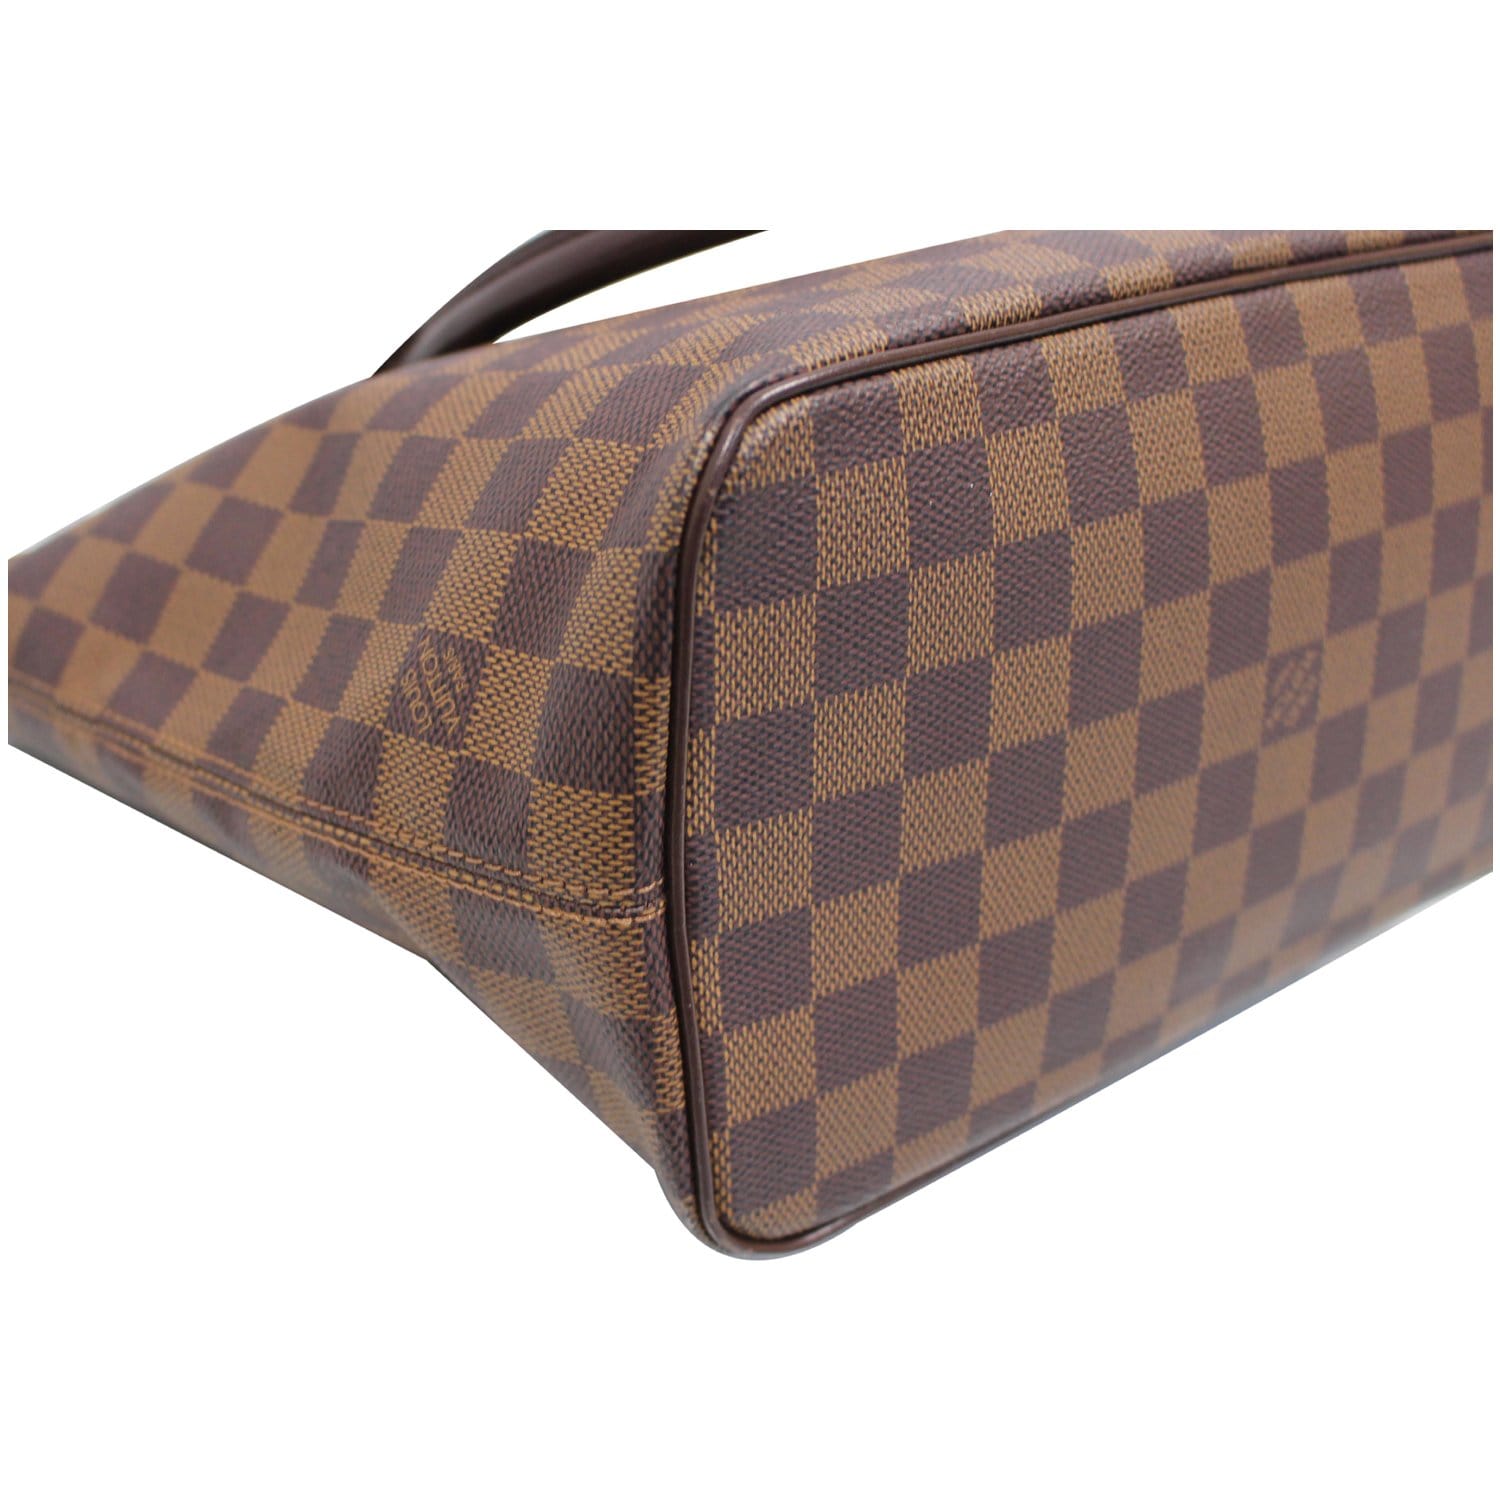 LOUIS VUITTON Damier Ebene Brown Leather Saleya PM Hand Bag - Excellent &  Auth